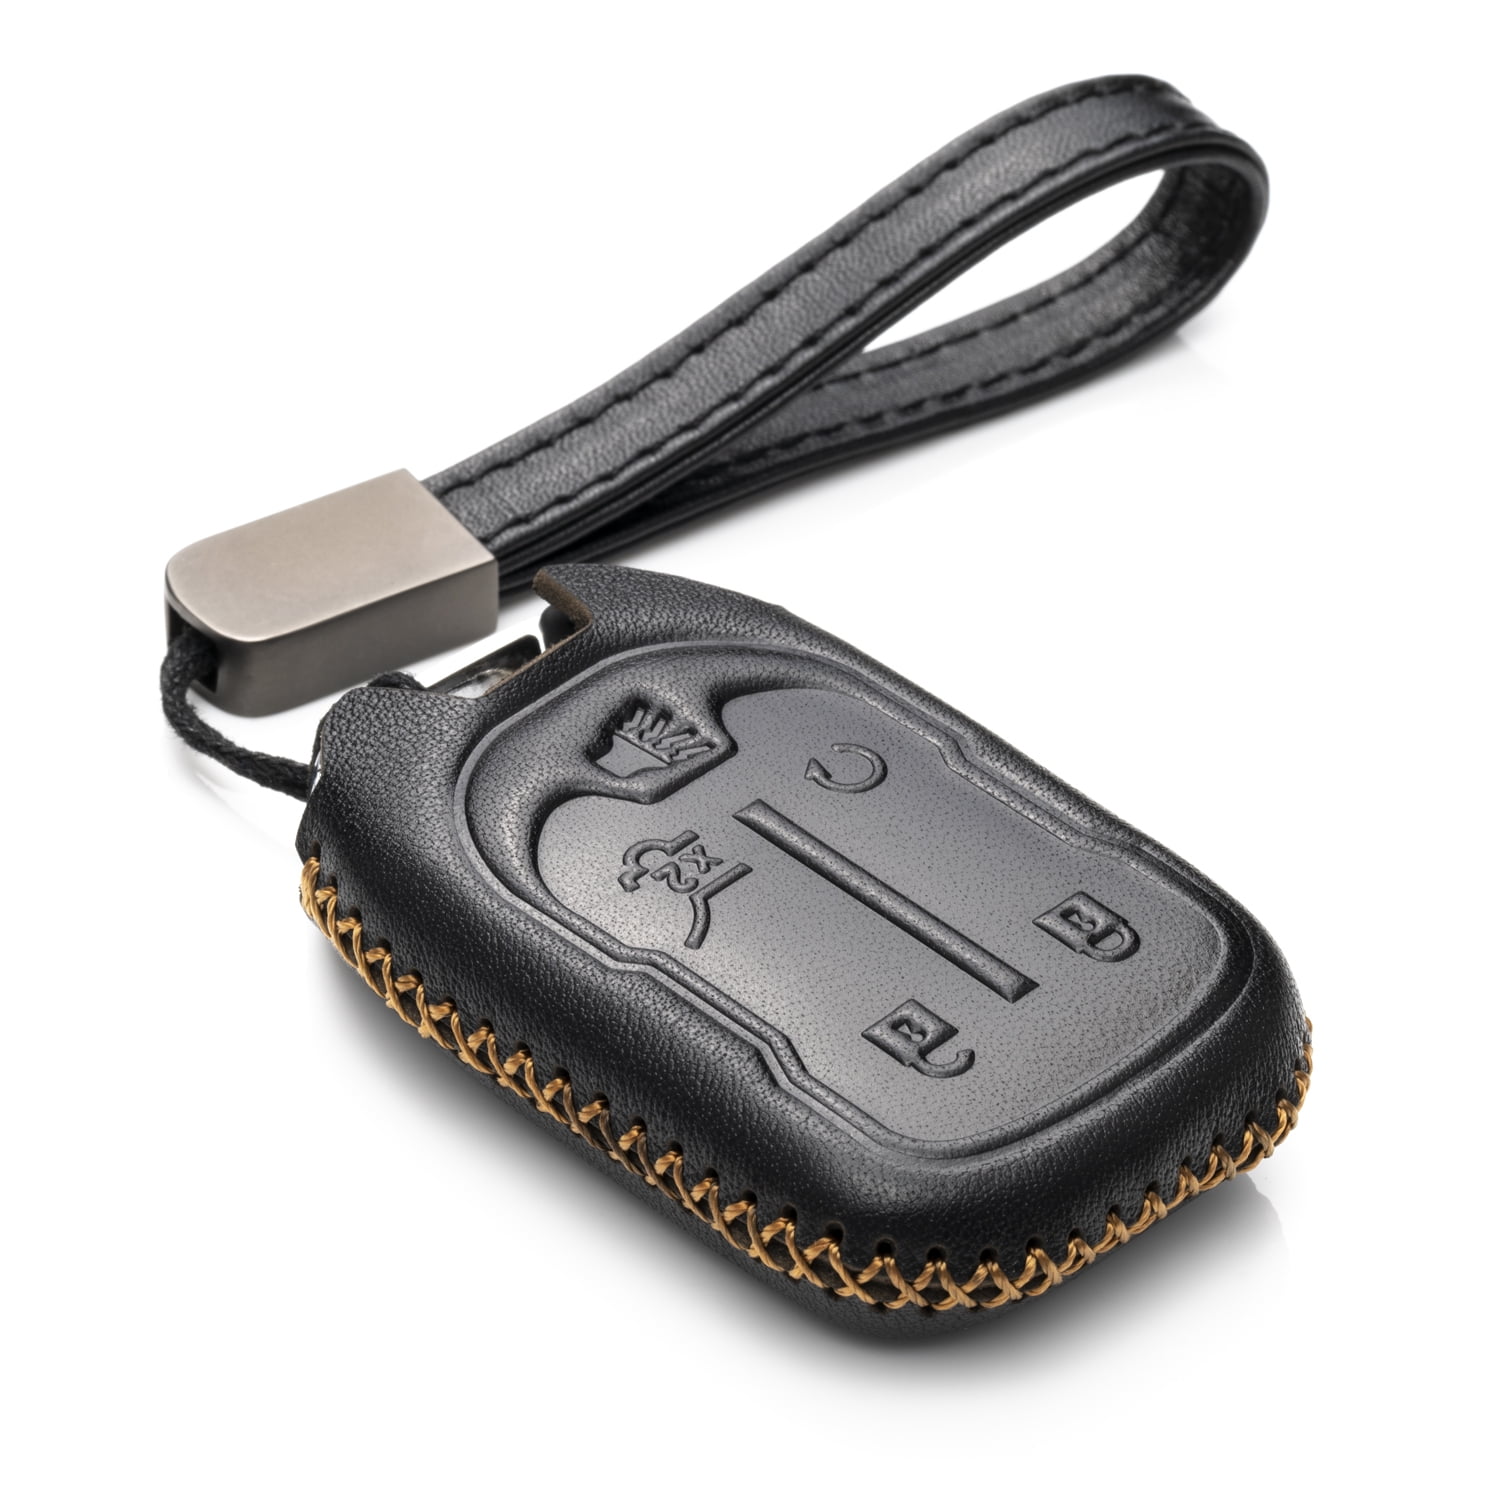 1pc Universal Key Fob Cover Car Key Case Key Fob Protector Genuine